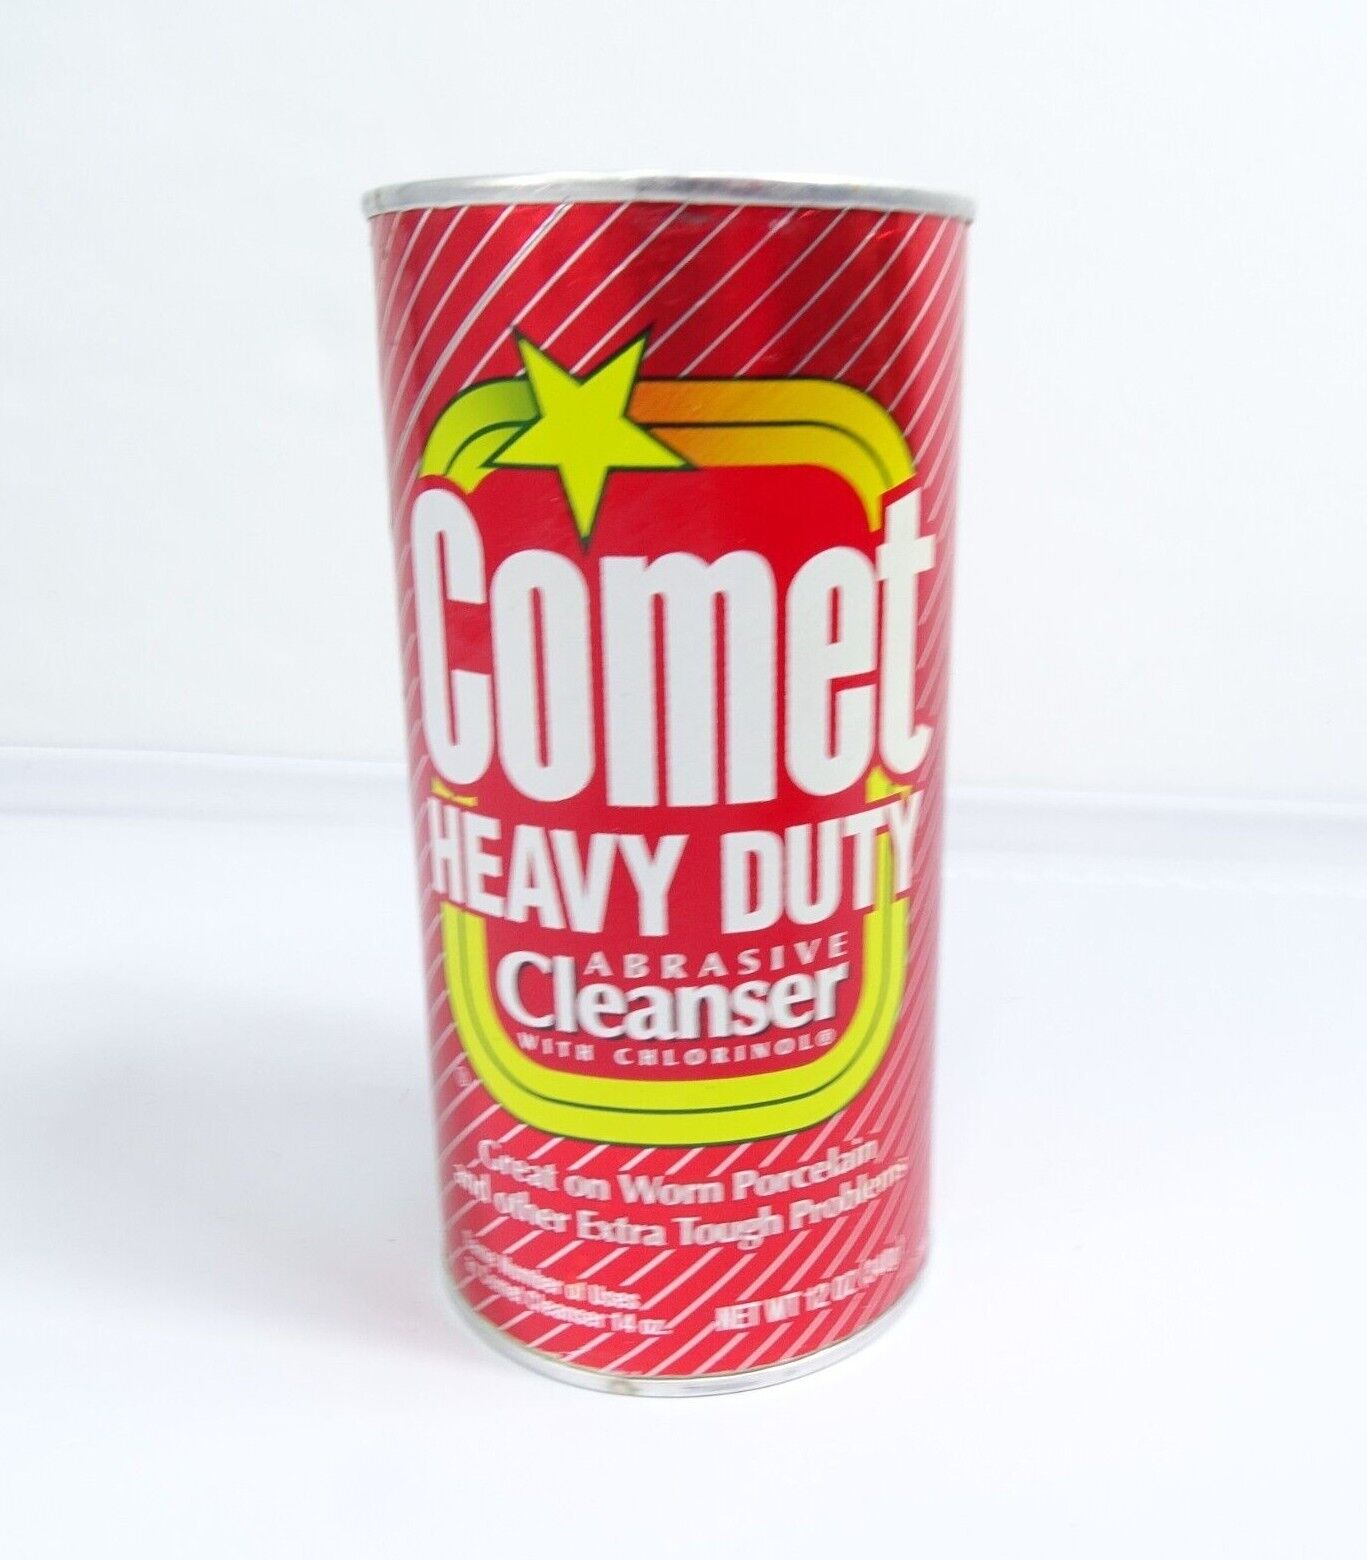 Vintage 1995 New 12 oz Heavy Duty Comet Abrasive Cleanser Cleaner Chlorinol Prop